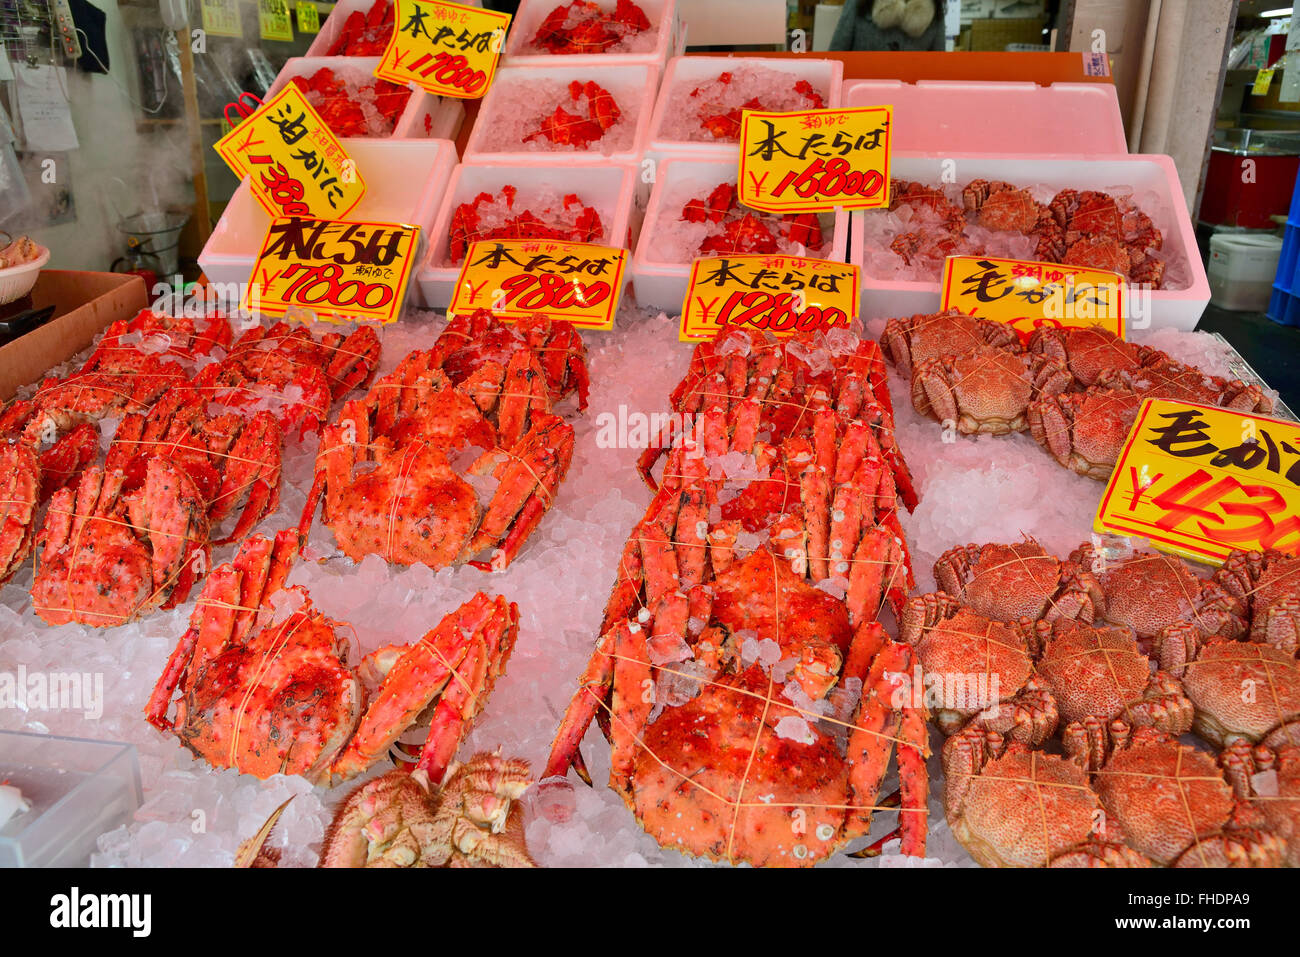 Fischmarkt Stockfoto